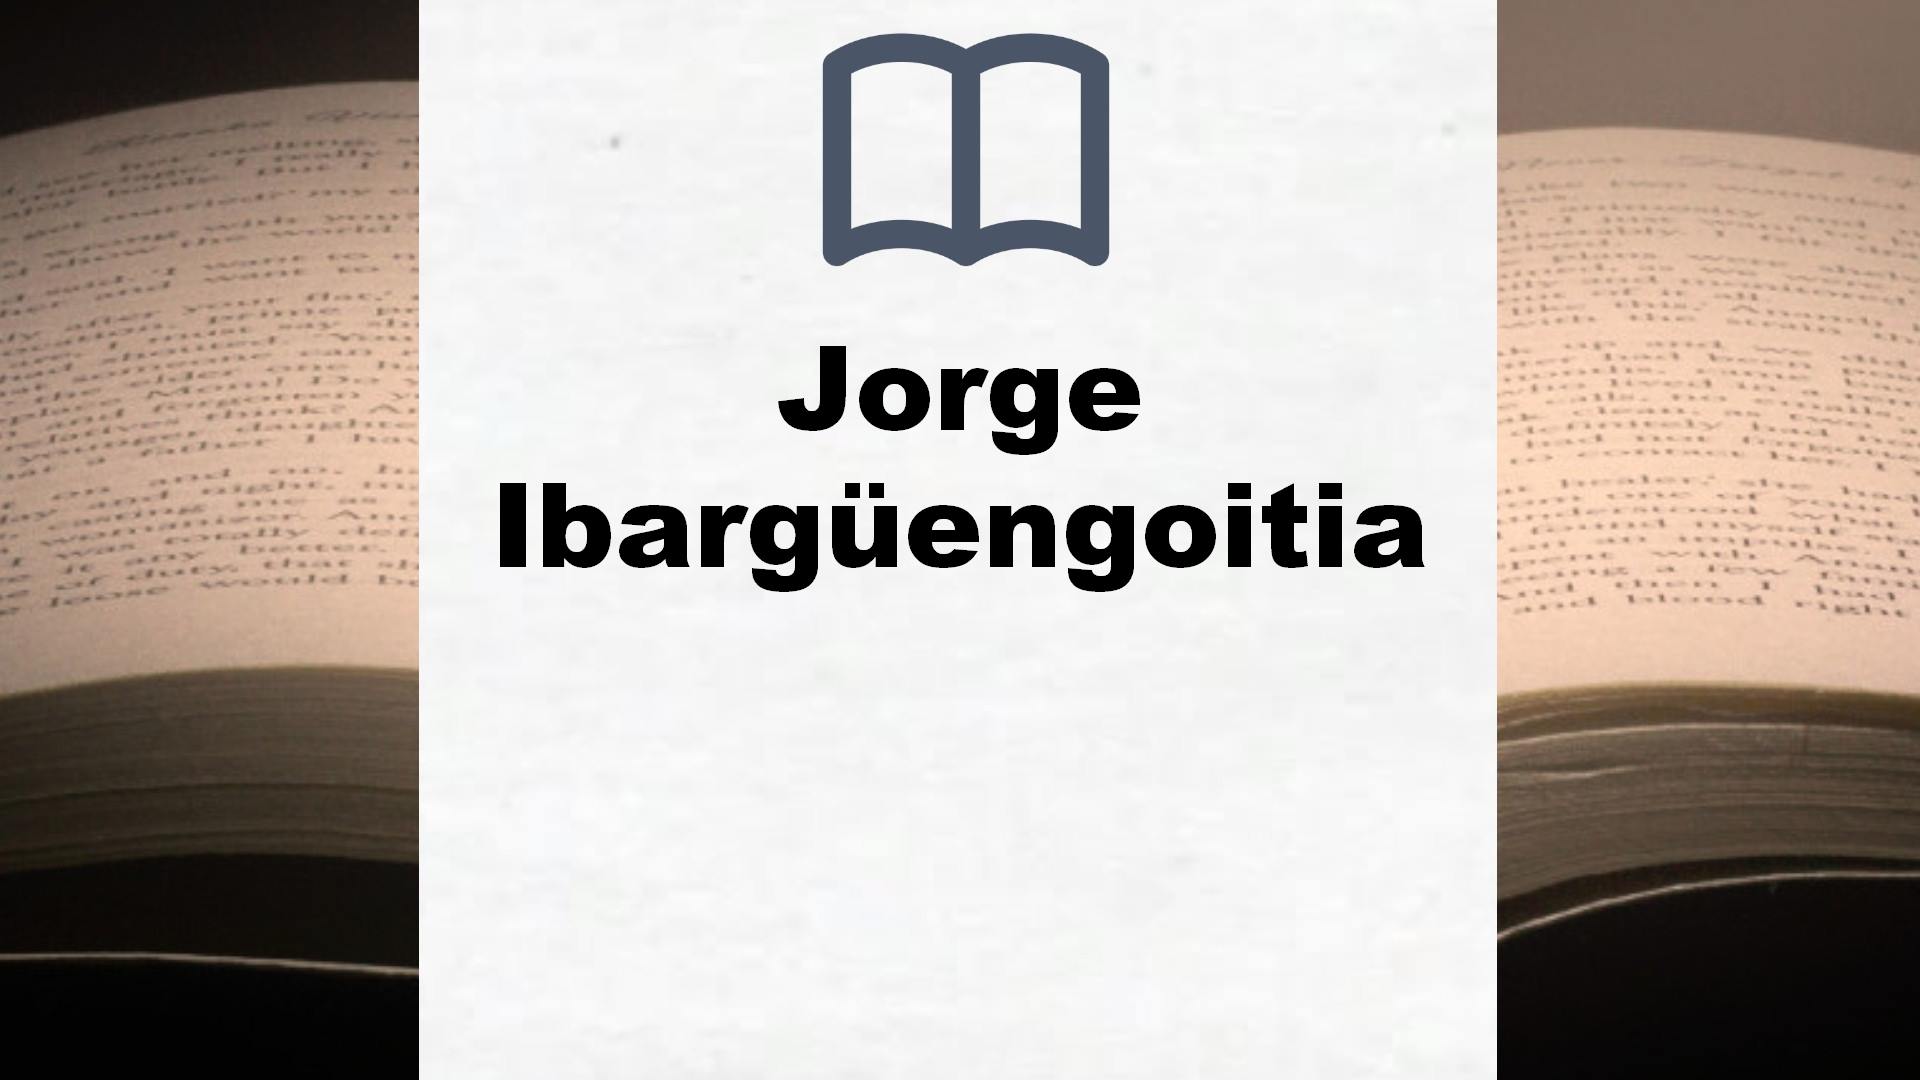 Libros Jorge Ibargüengoitia